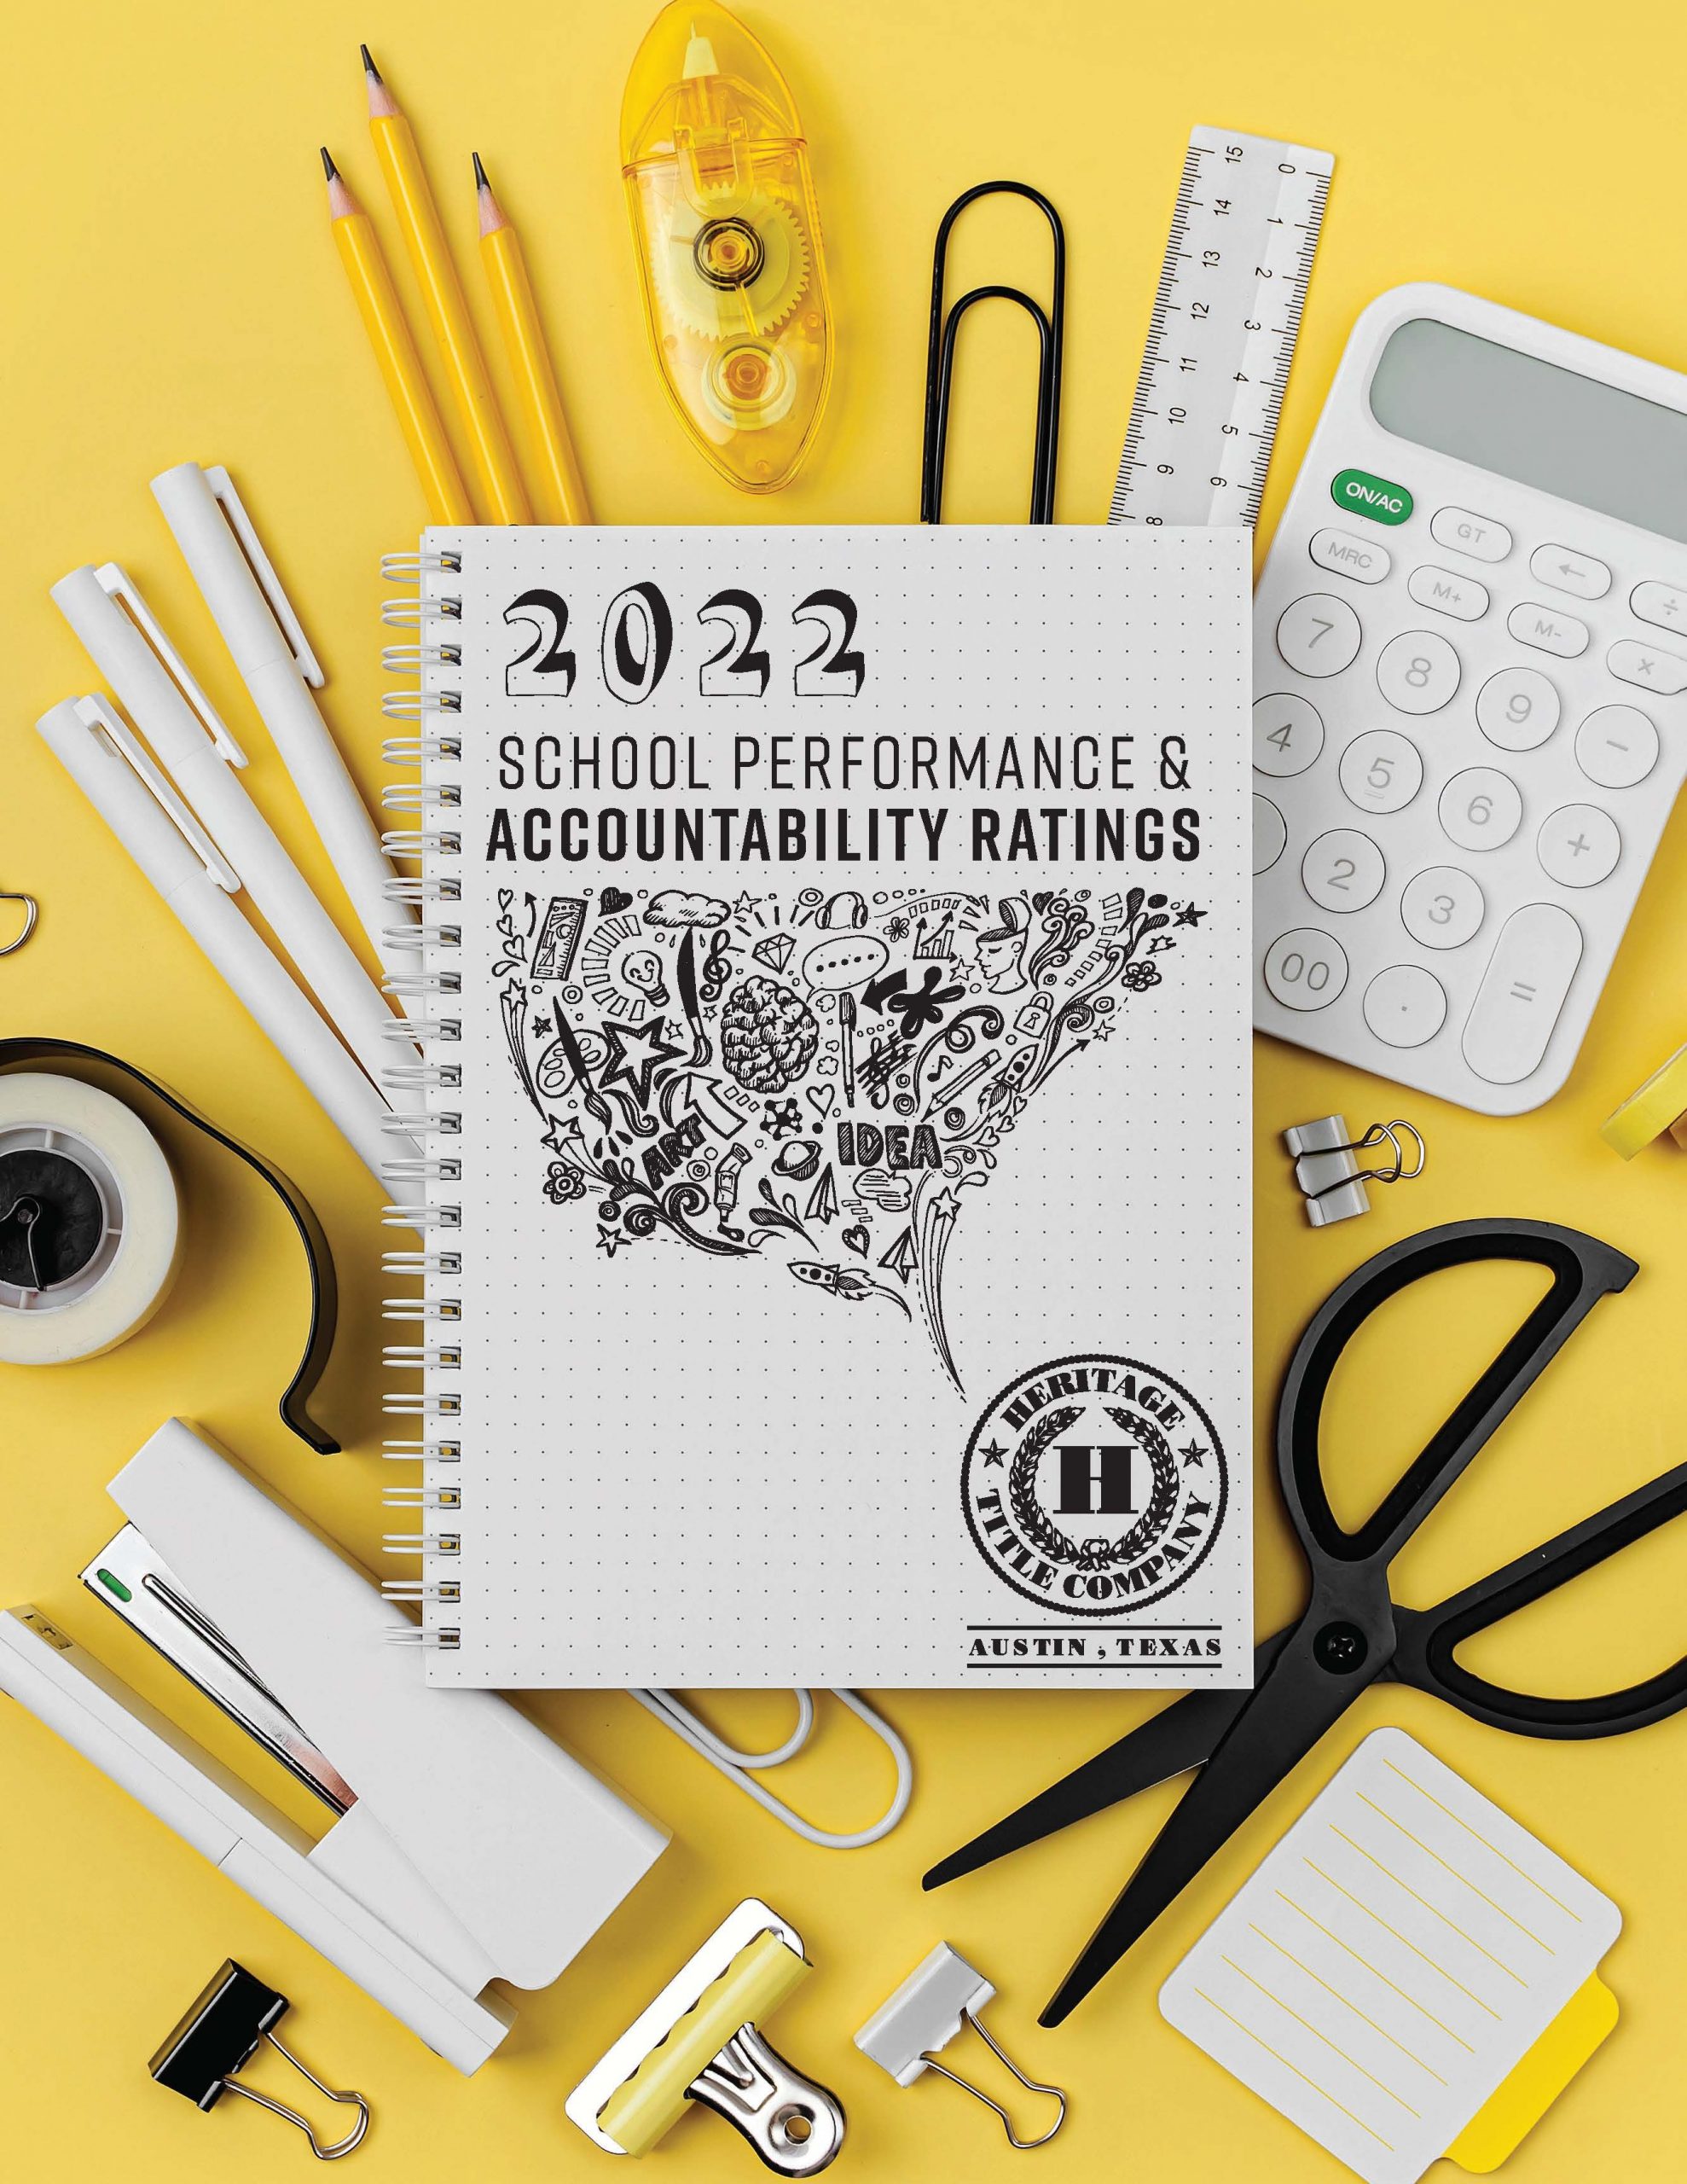 School Performance & Accountability Ratings